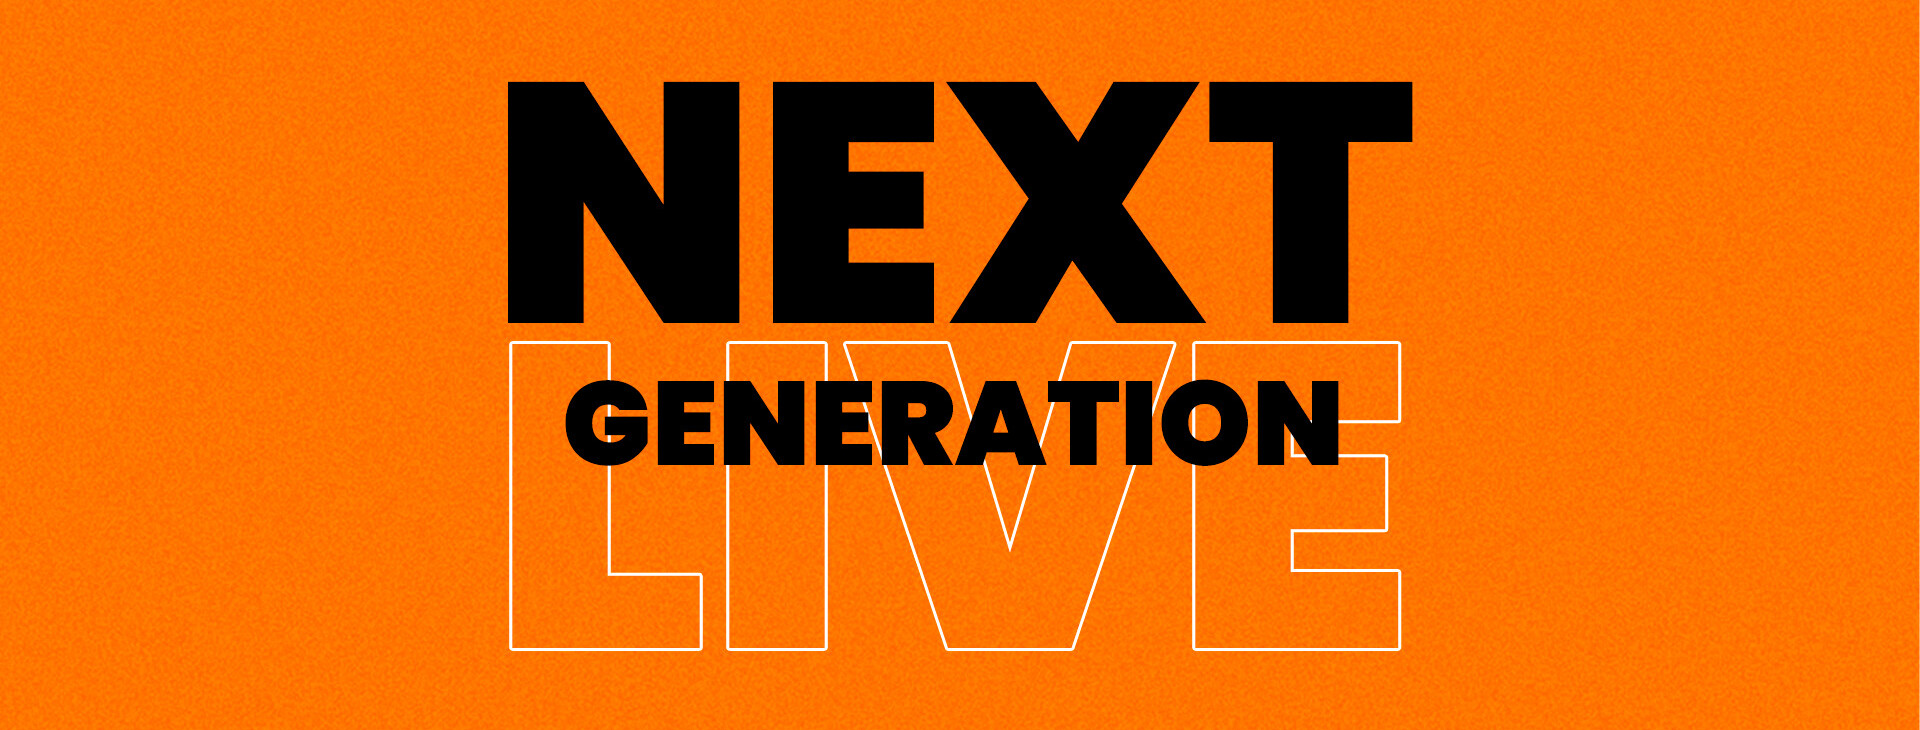 NEXT GENERATION LIVE!